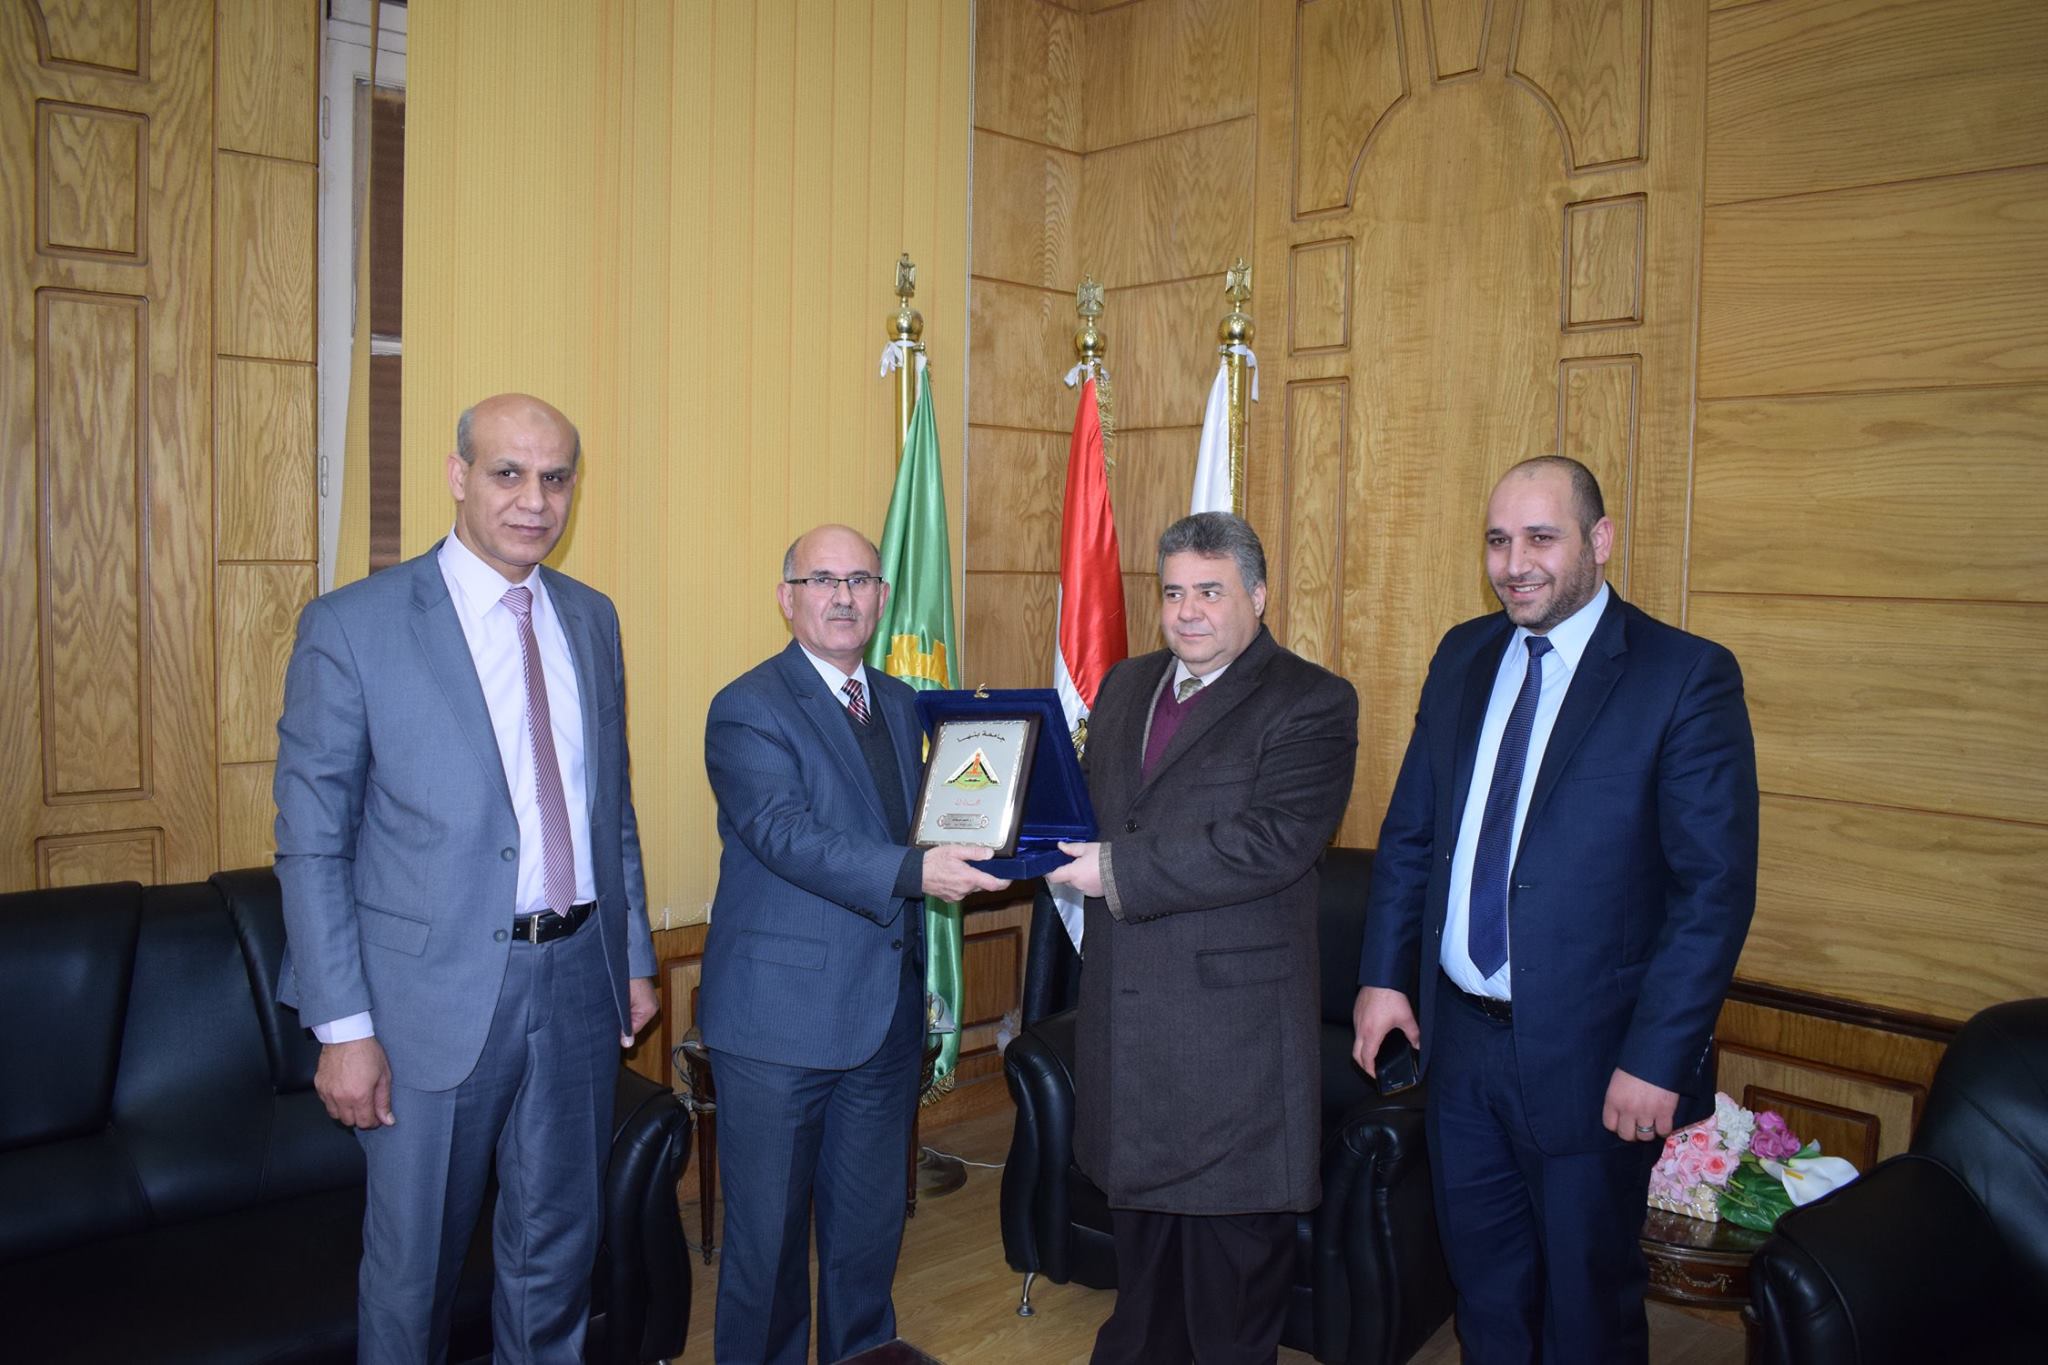 The establishment of the first Forum of Higher Education between Benha and Jordanian universities